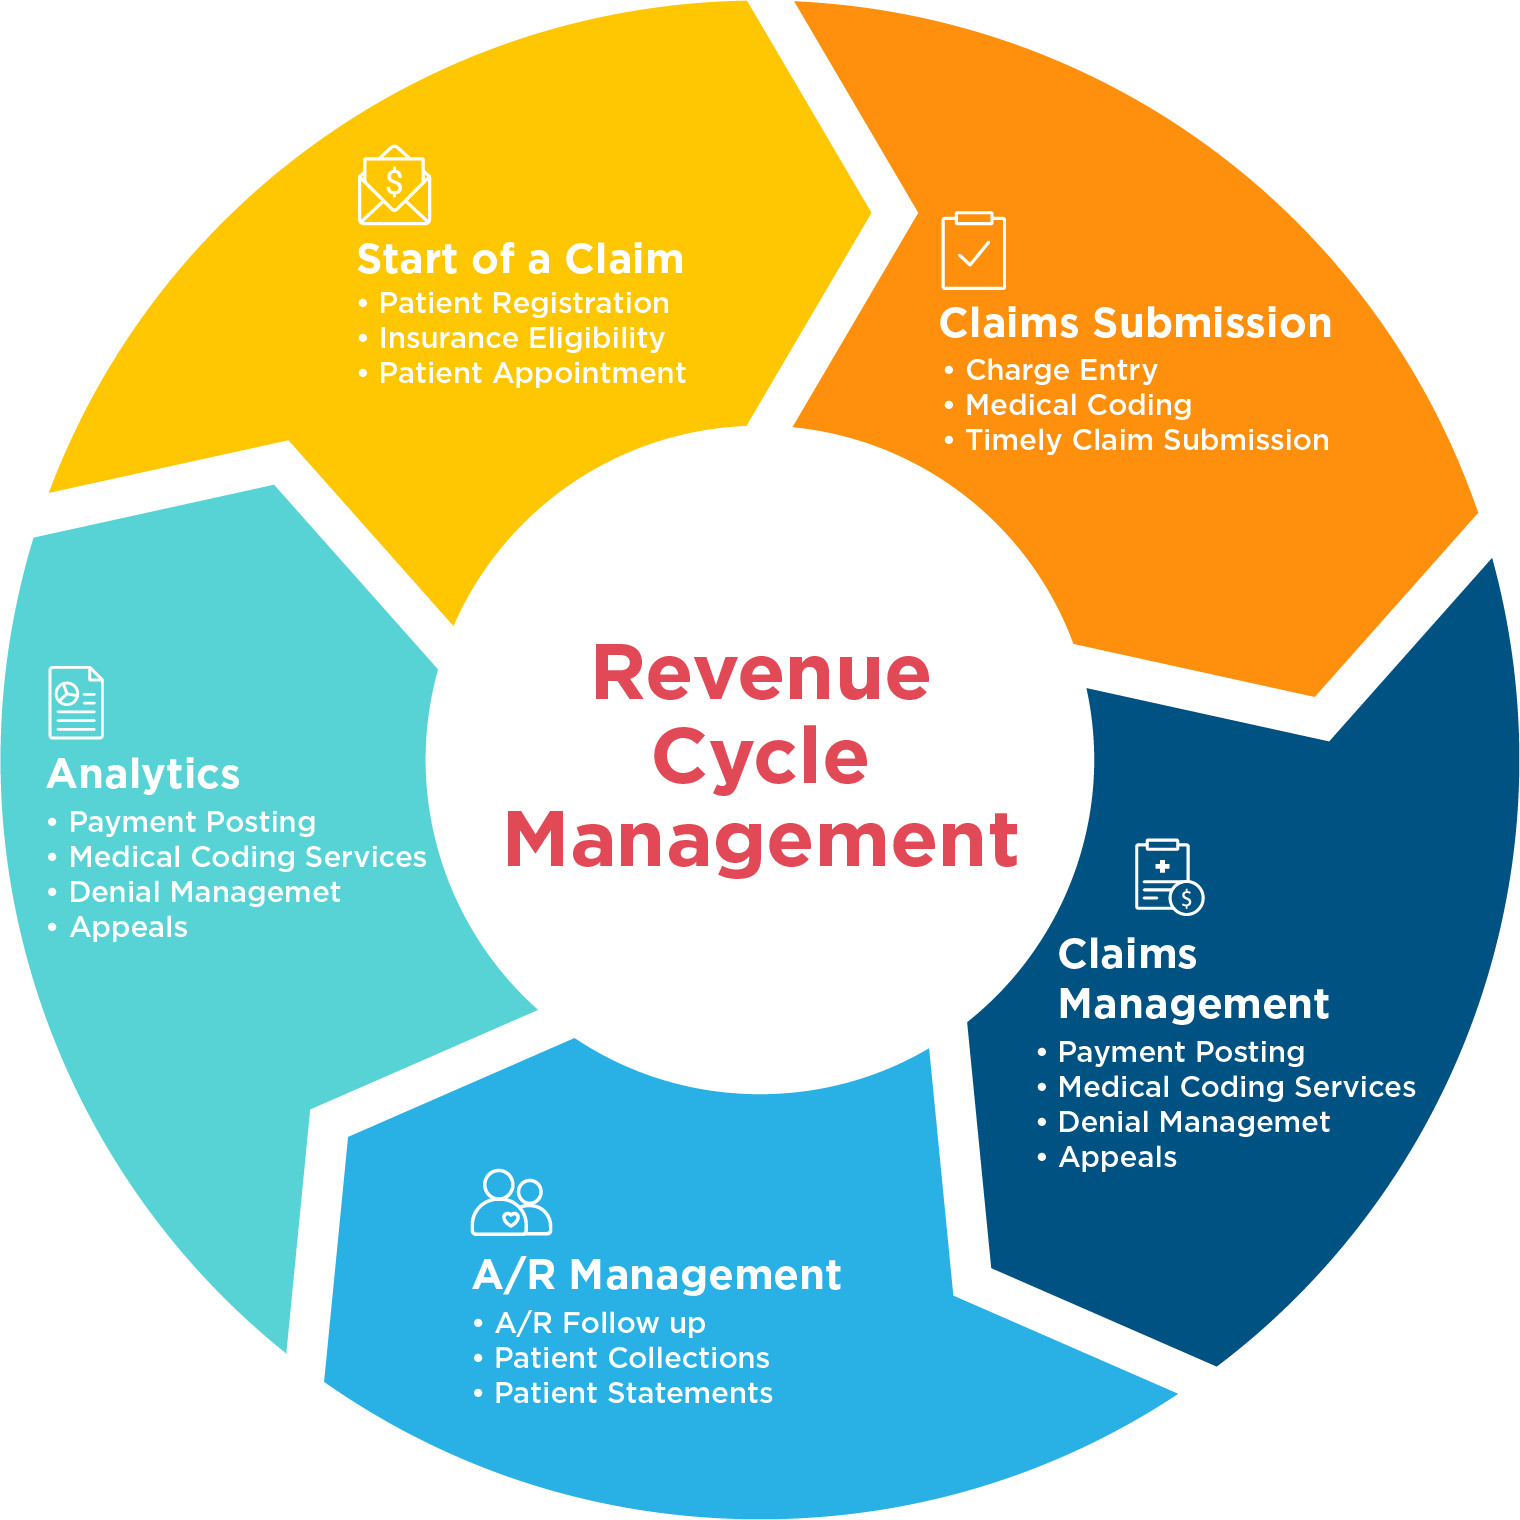 Global Healthcare Revenue Cycle Management Market